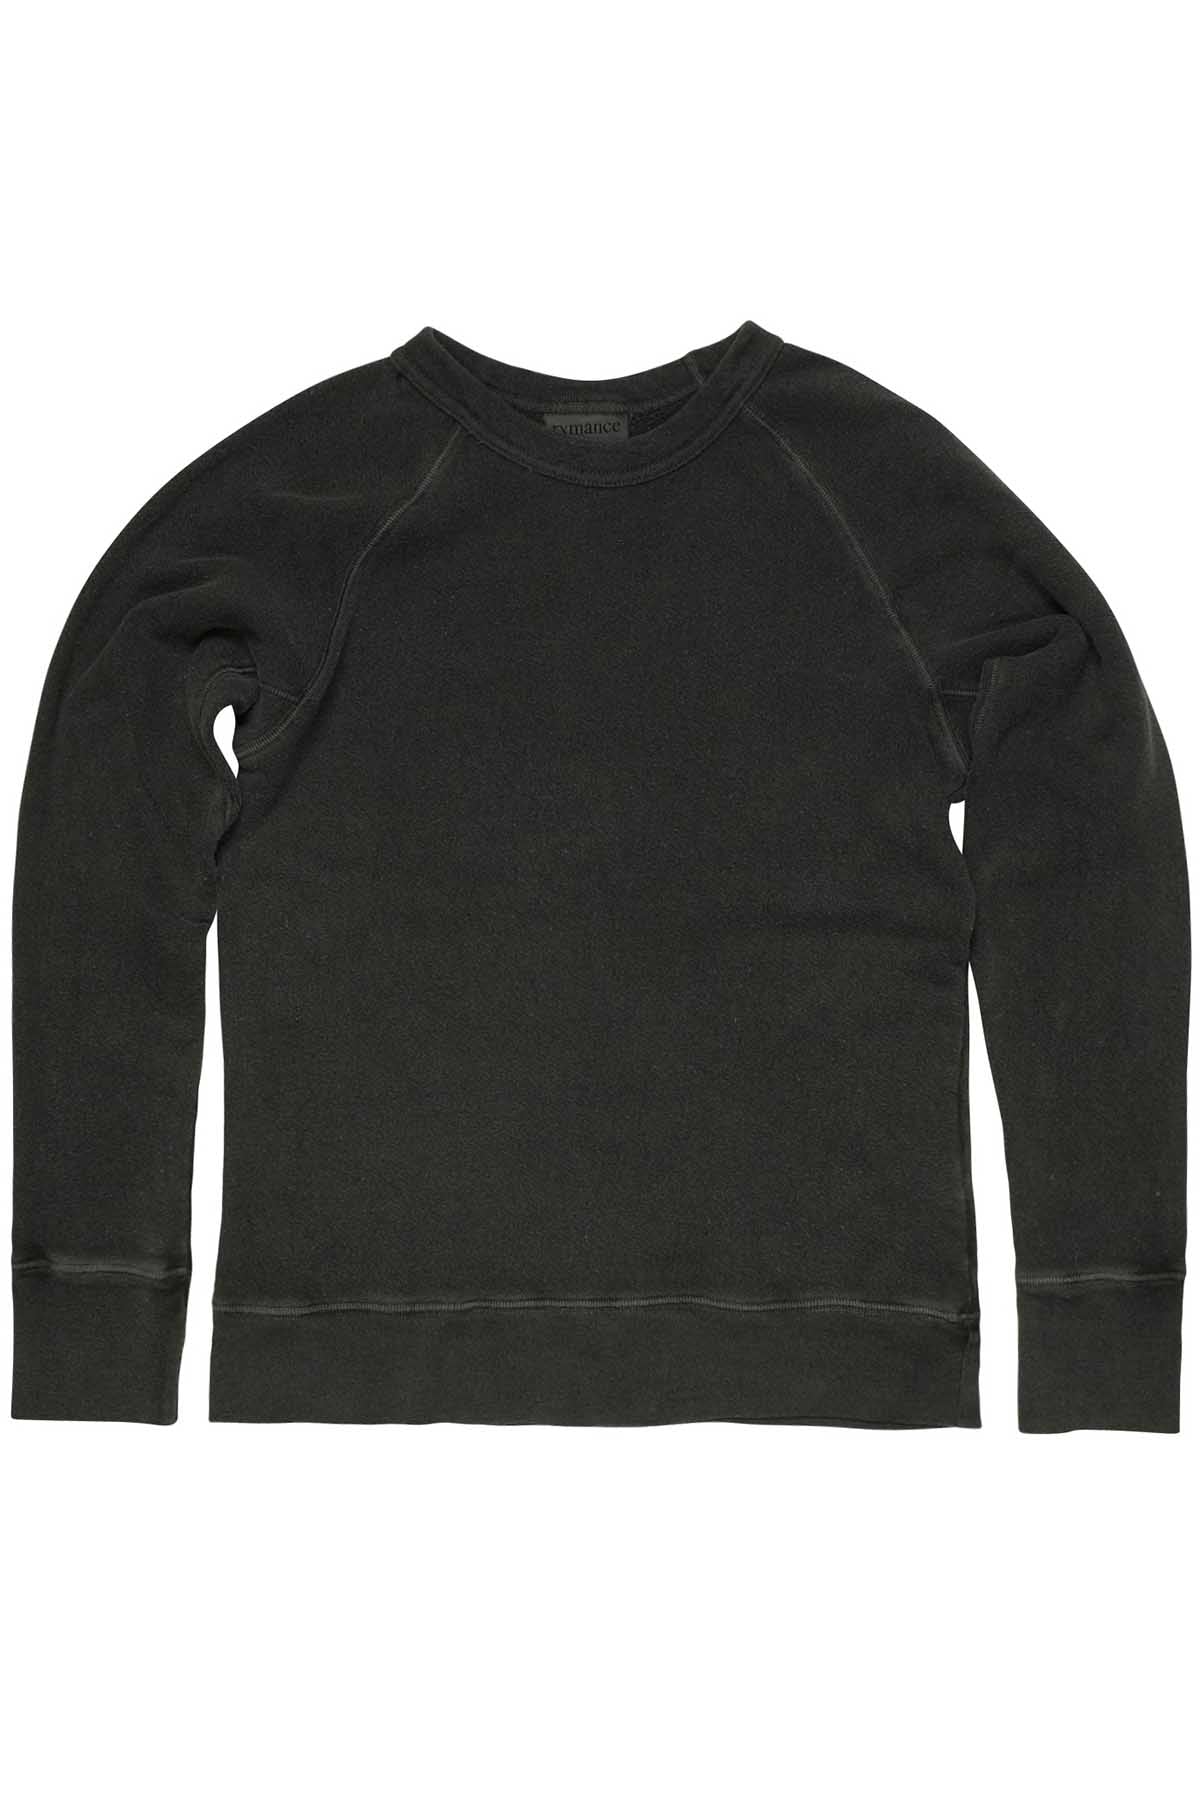 Rxmance Unisex Vintage Black Crew Sweatshirt